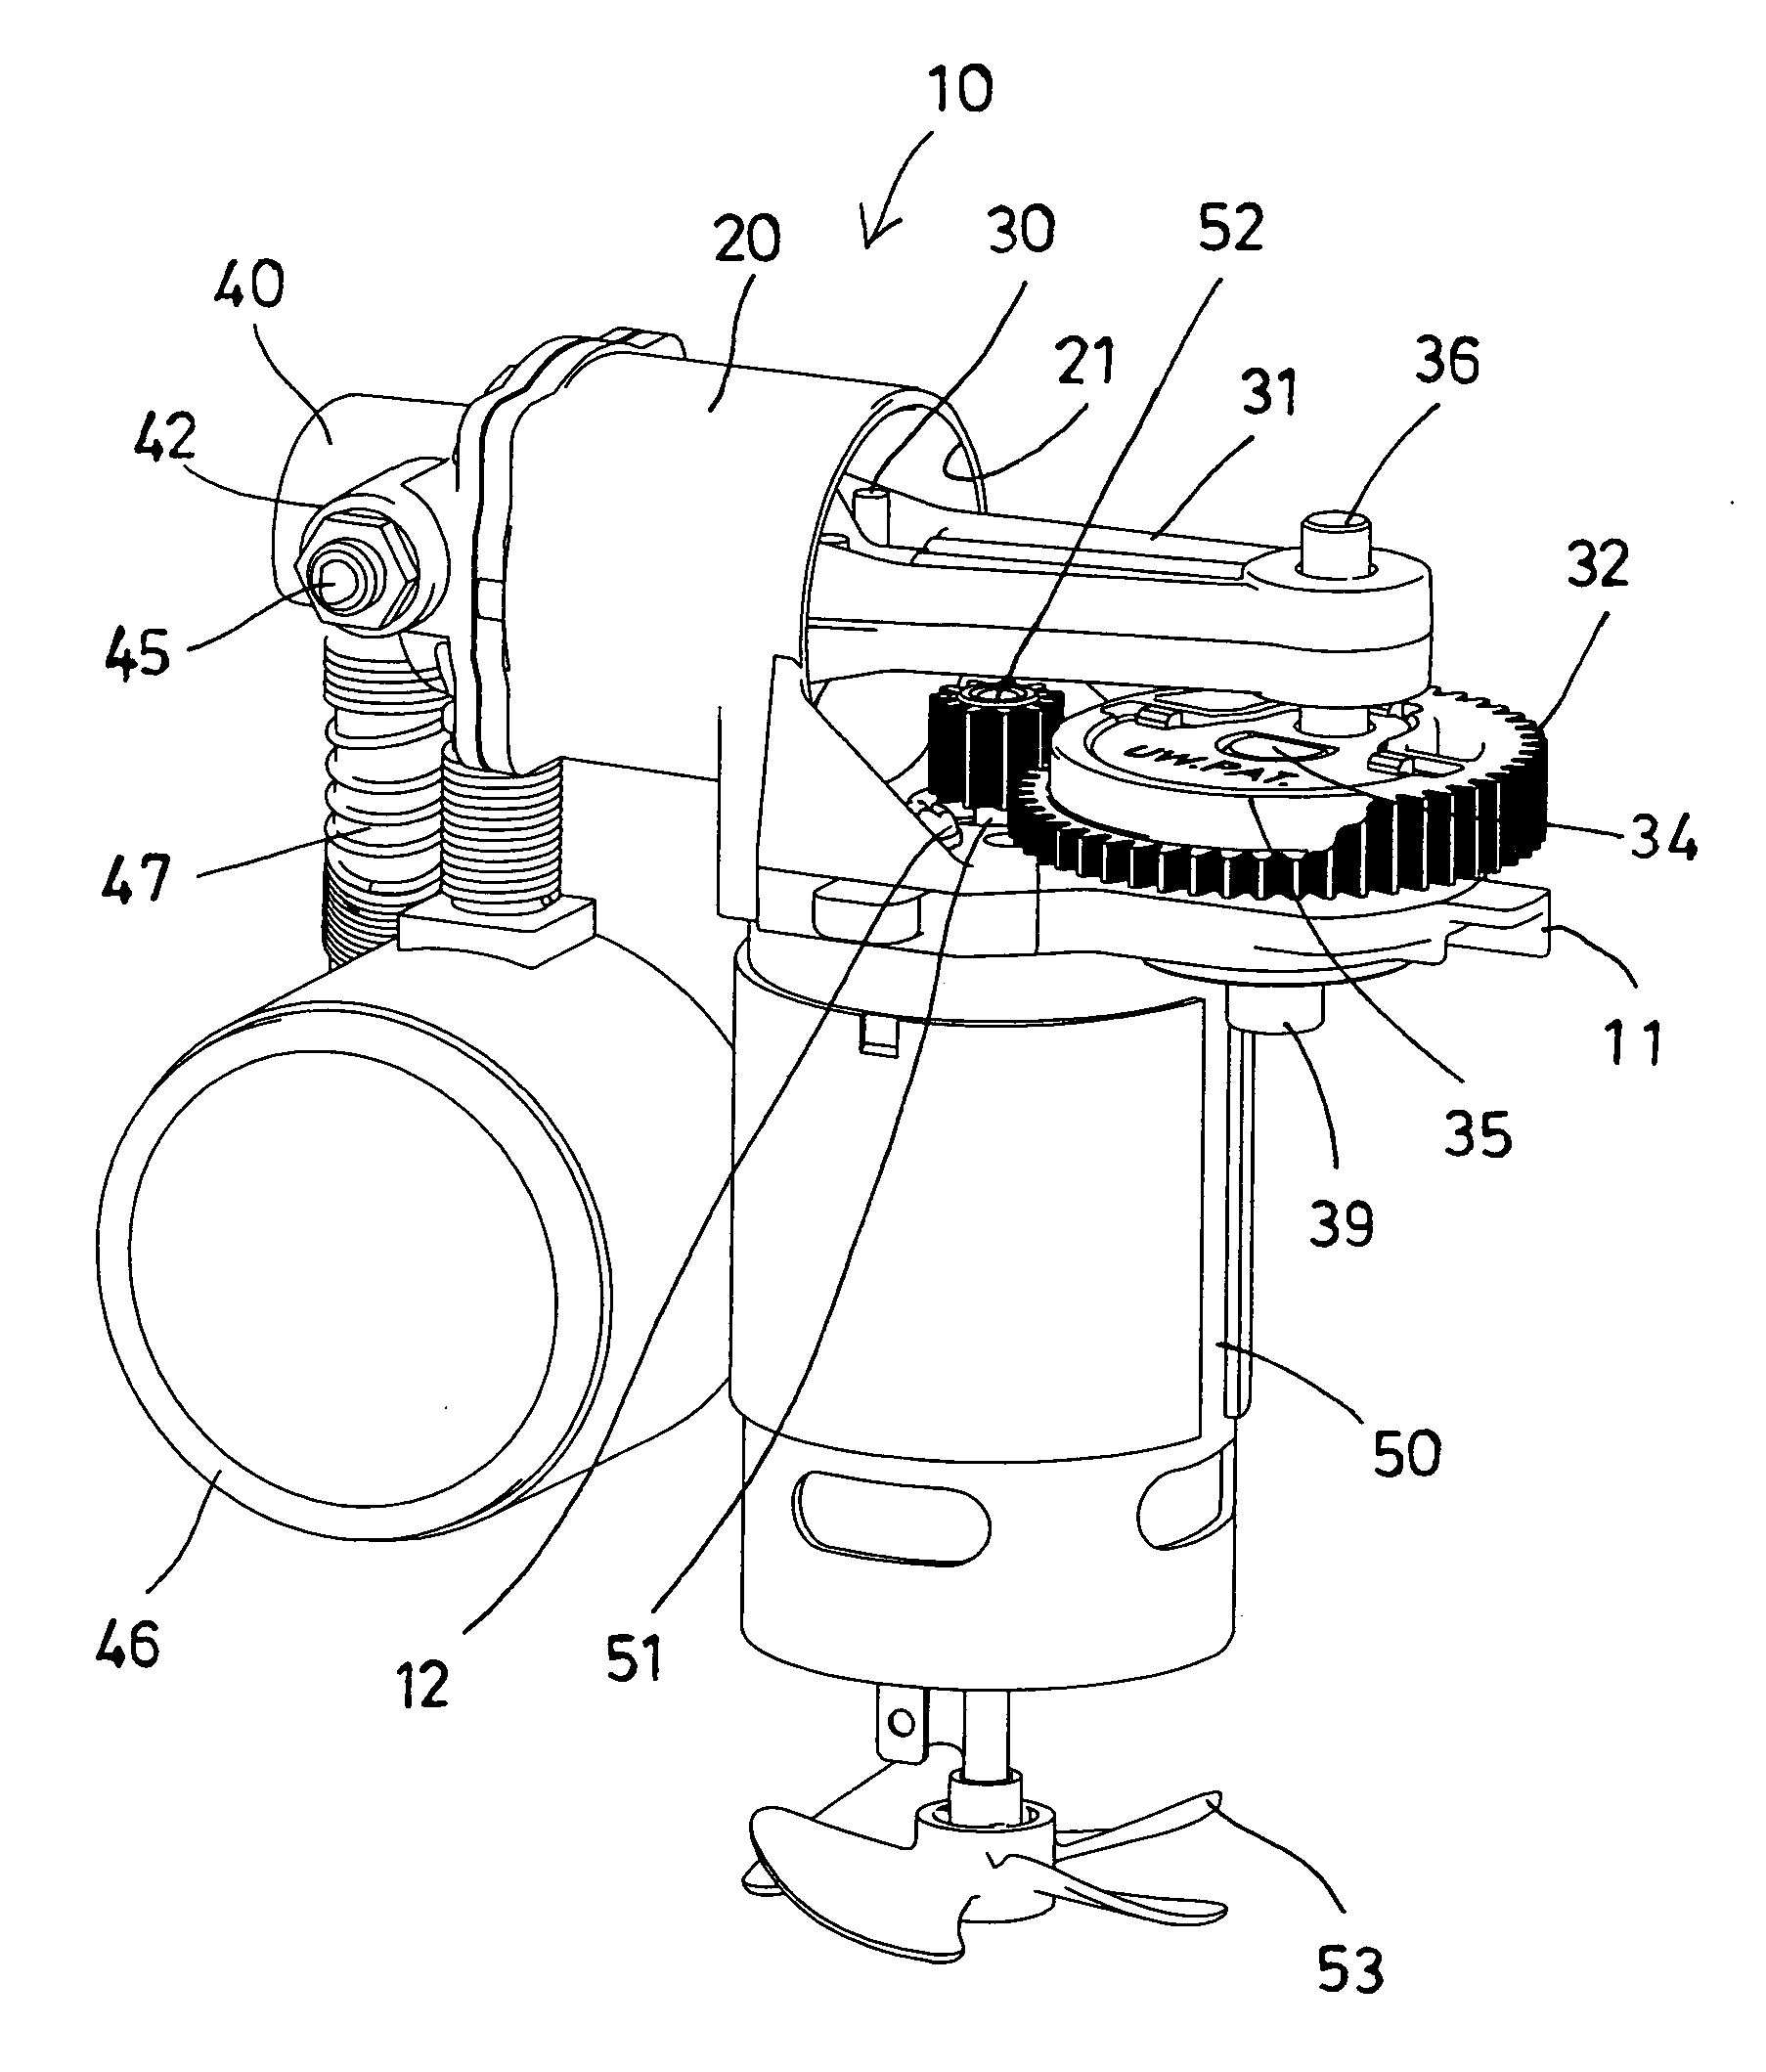 Bearing arrangement for air compressor